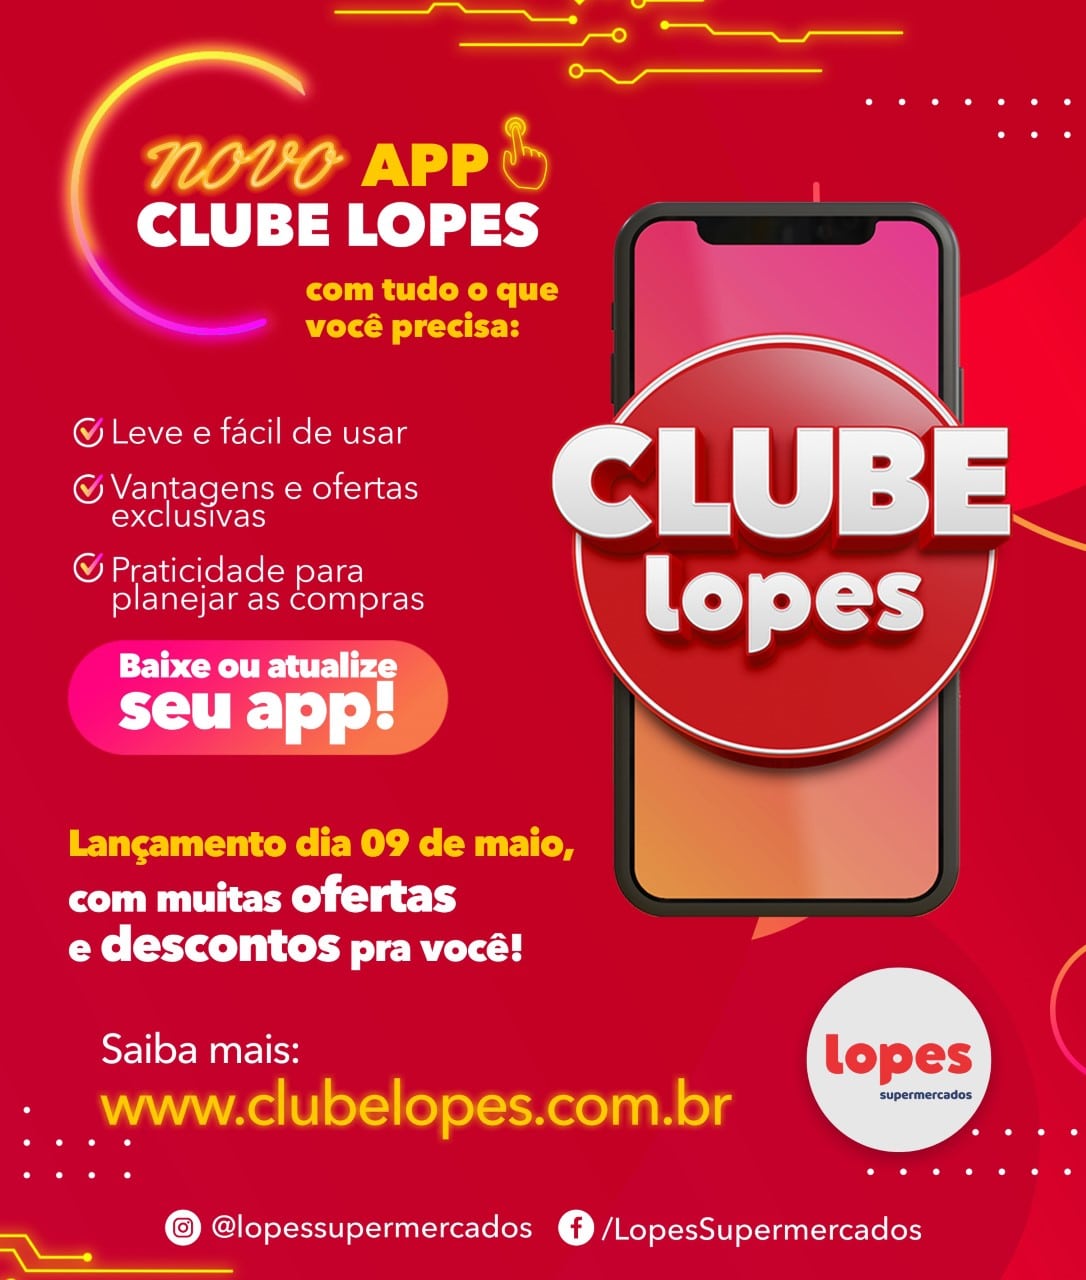 Lopes Supermercados novo aplicativo Clube Lopes